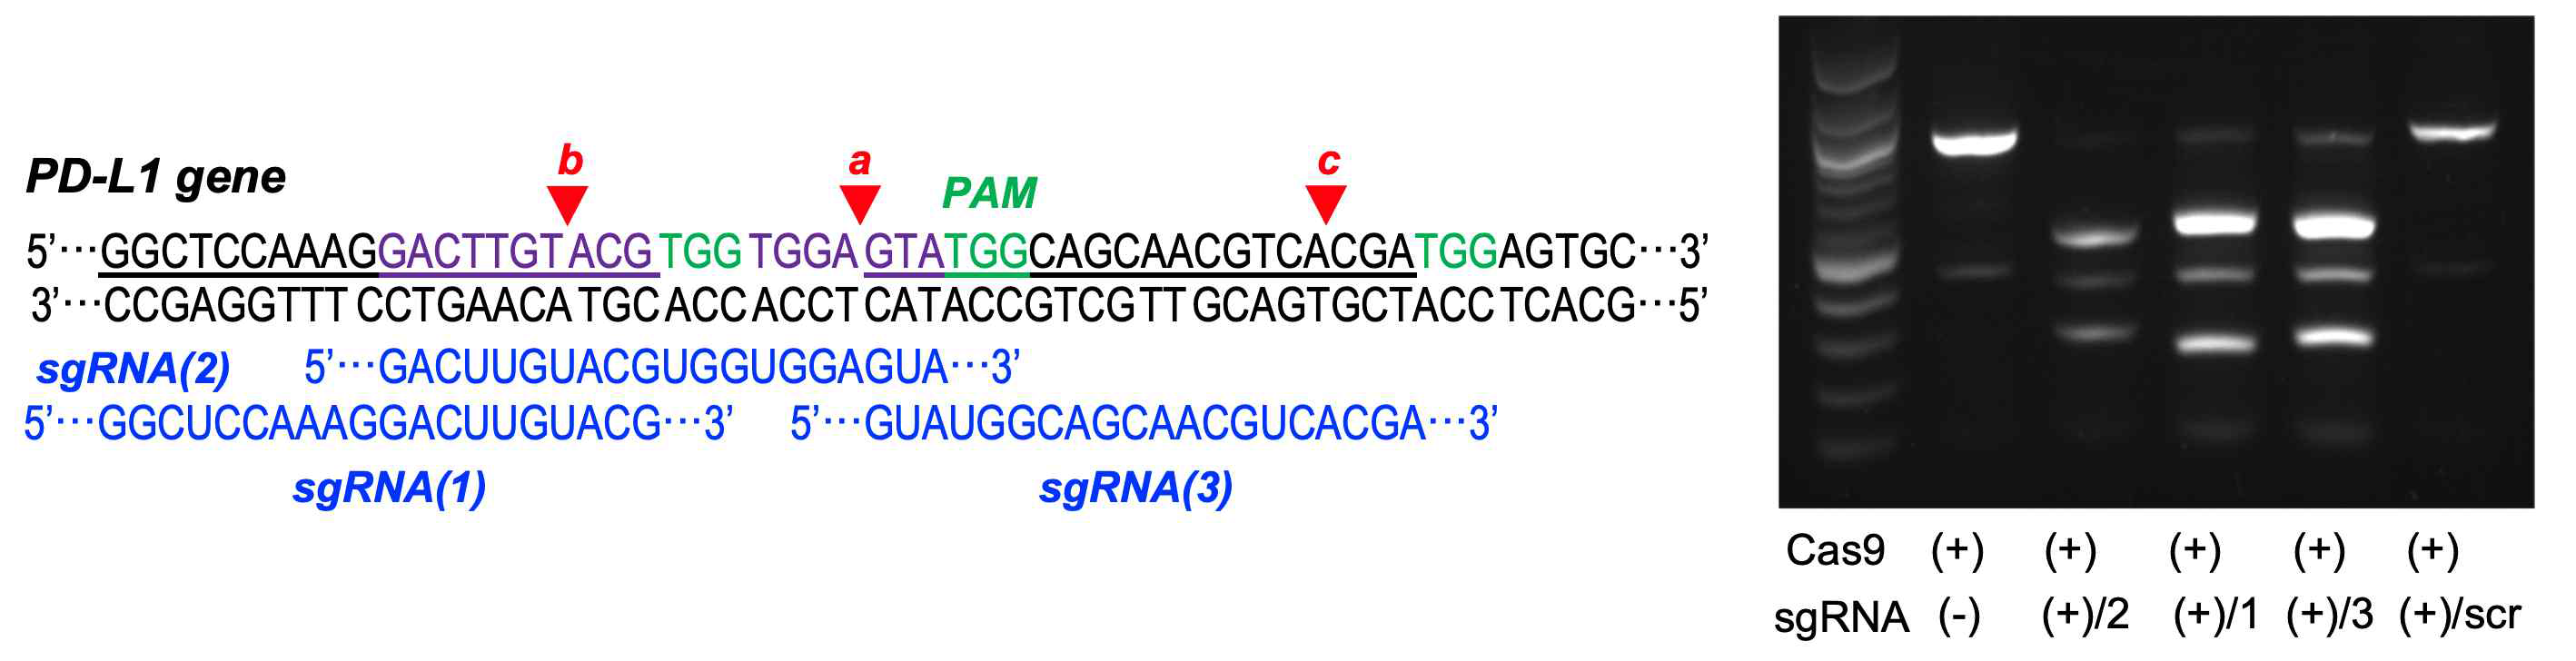 PD-L1 유전자 교정을 위한 sgRNA 설계 및 기능 분석 결과